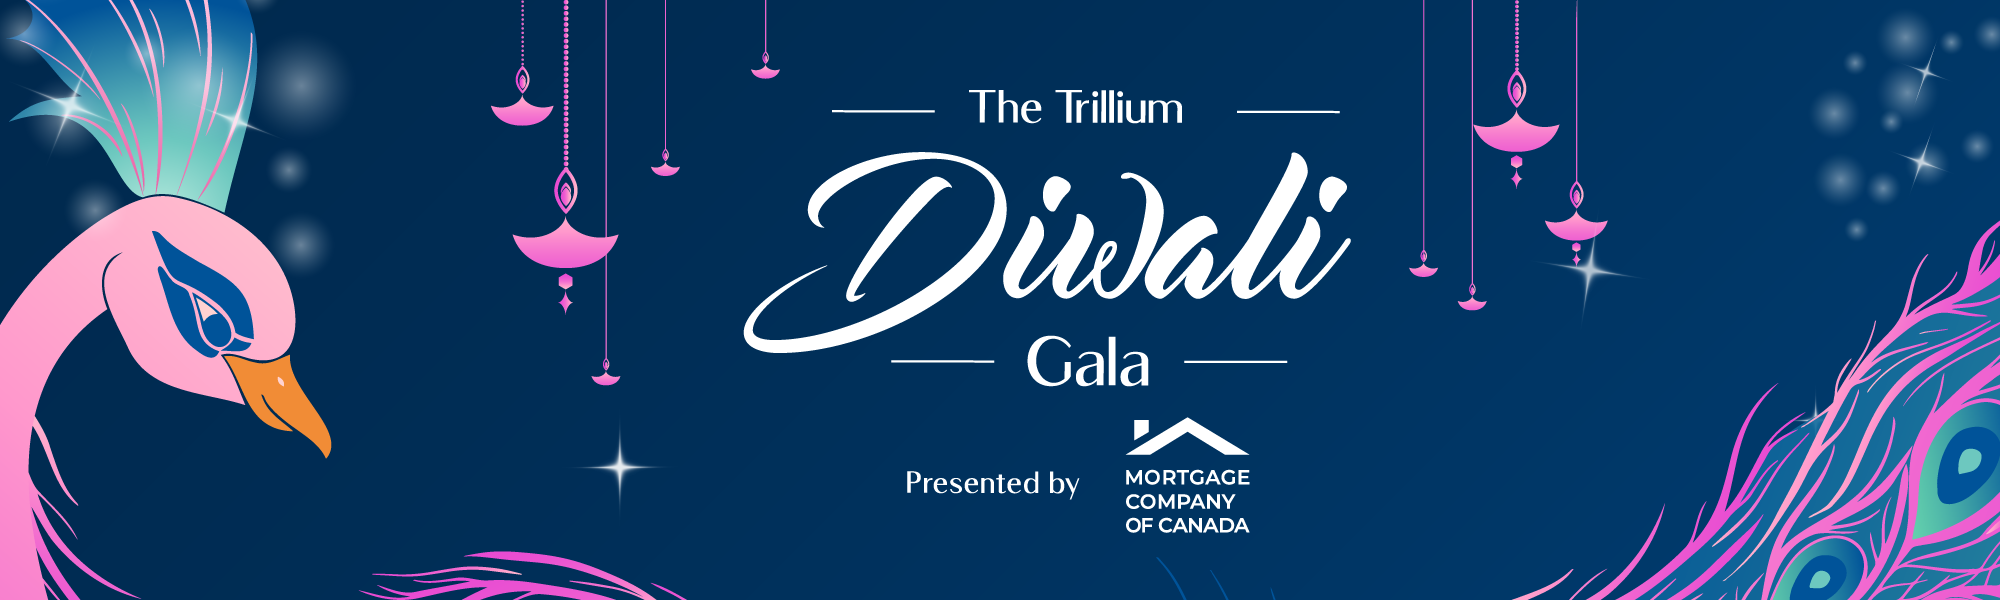 22nd Annual Trillium Diwali Gala, Brampton, Ontario, Canada